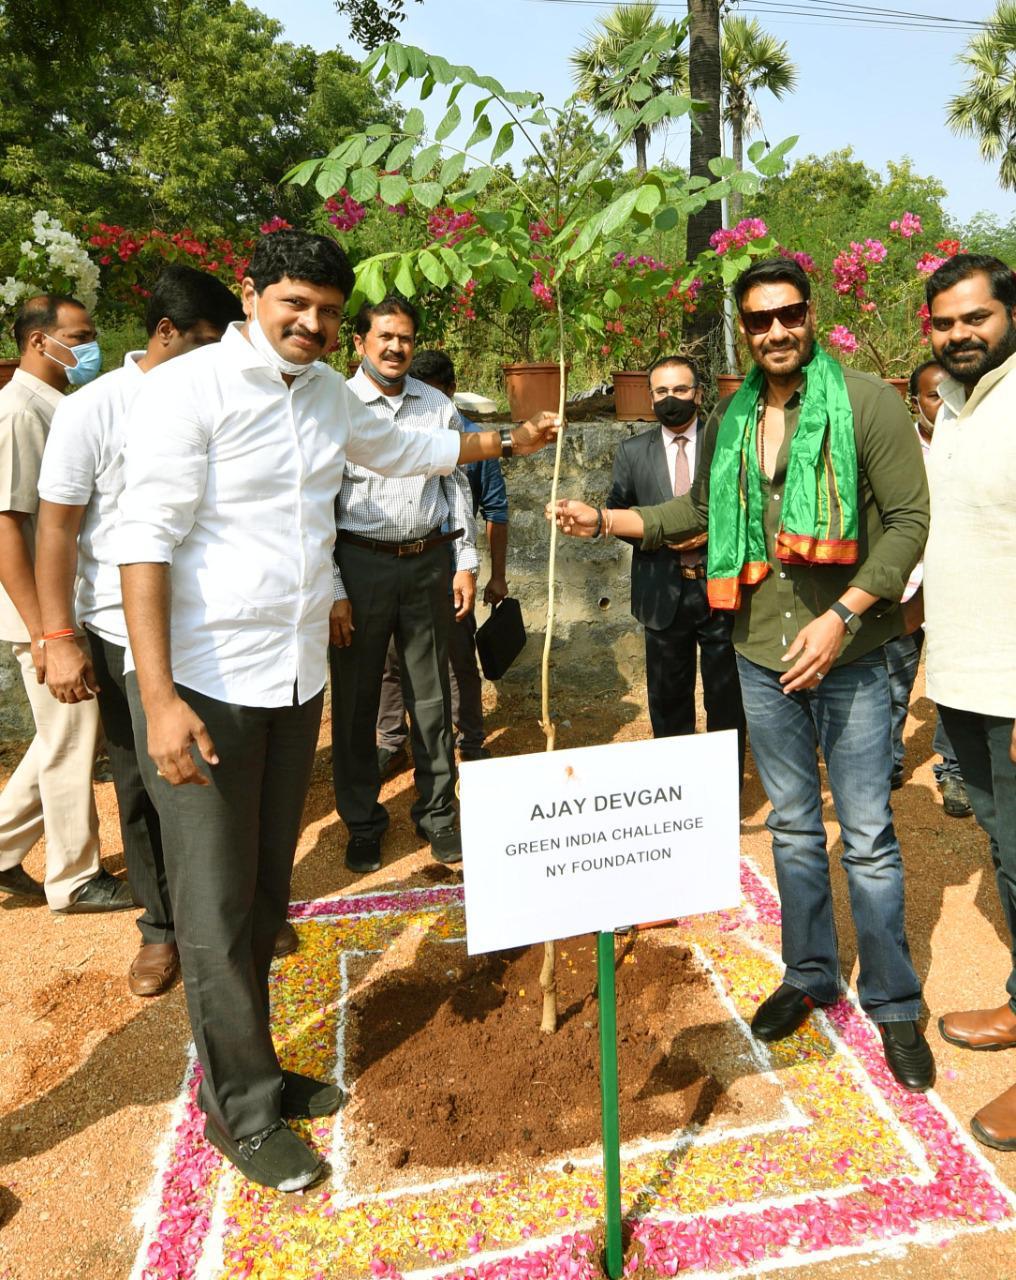 Ajay Devgn participated in Green India Challenge at ramoji film city